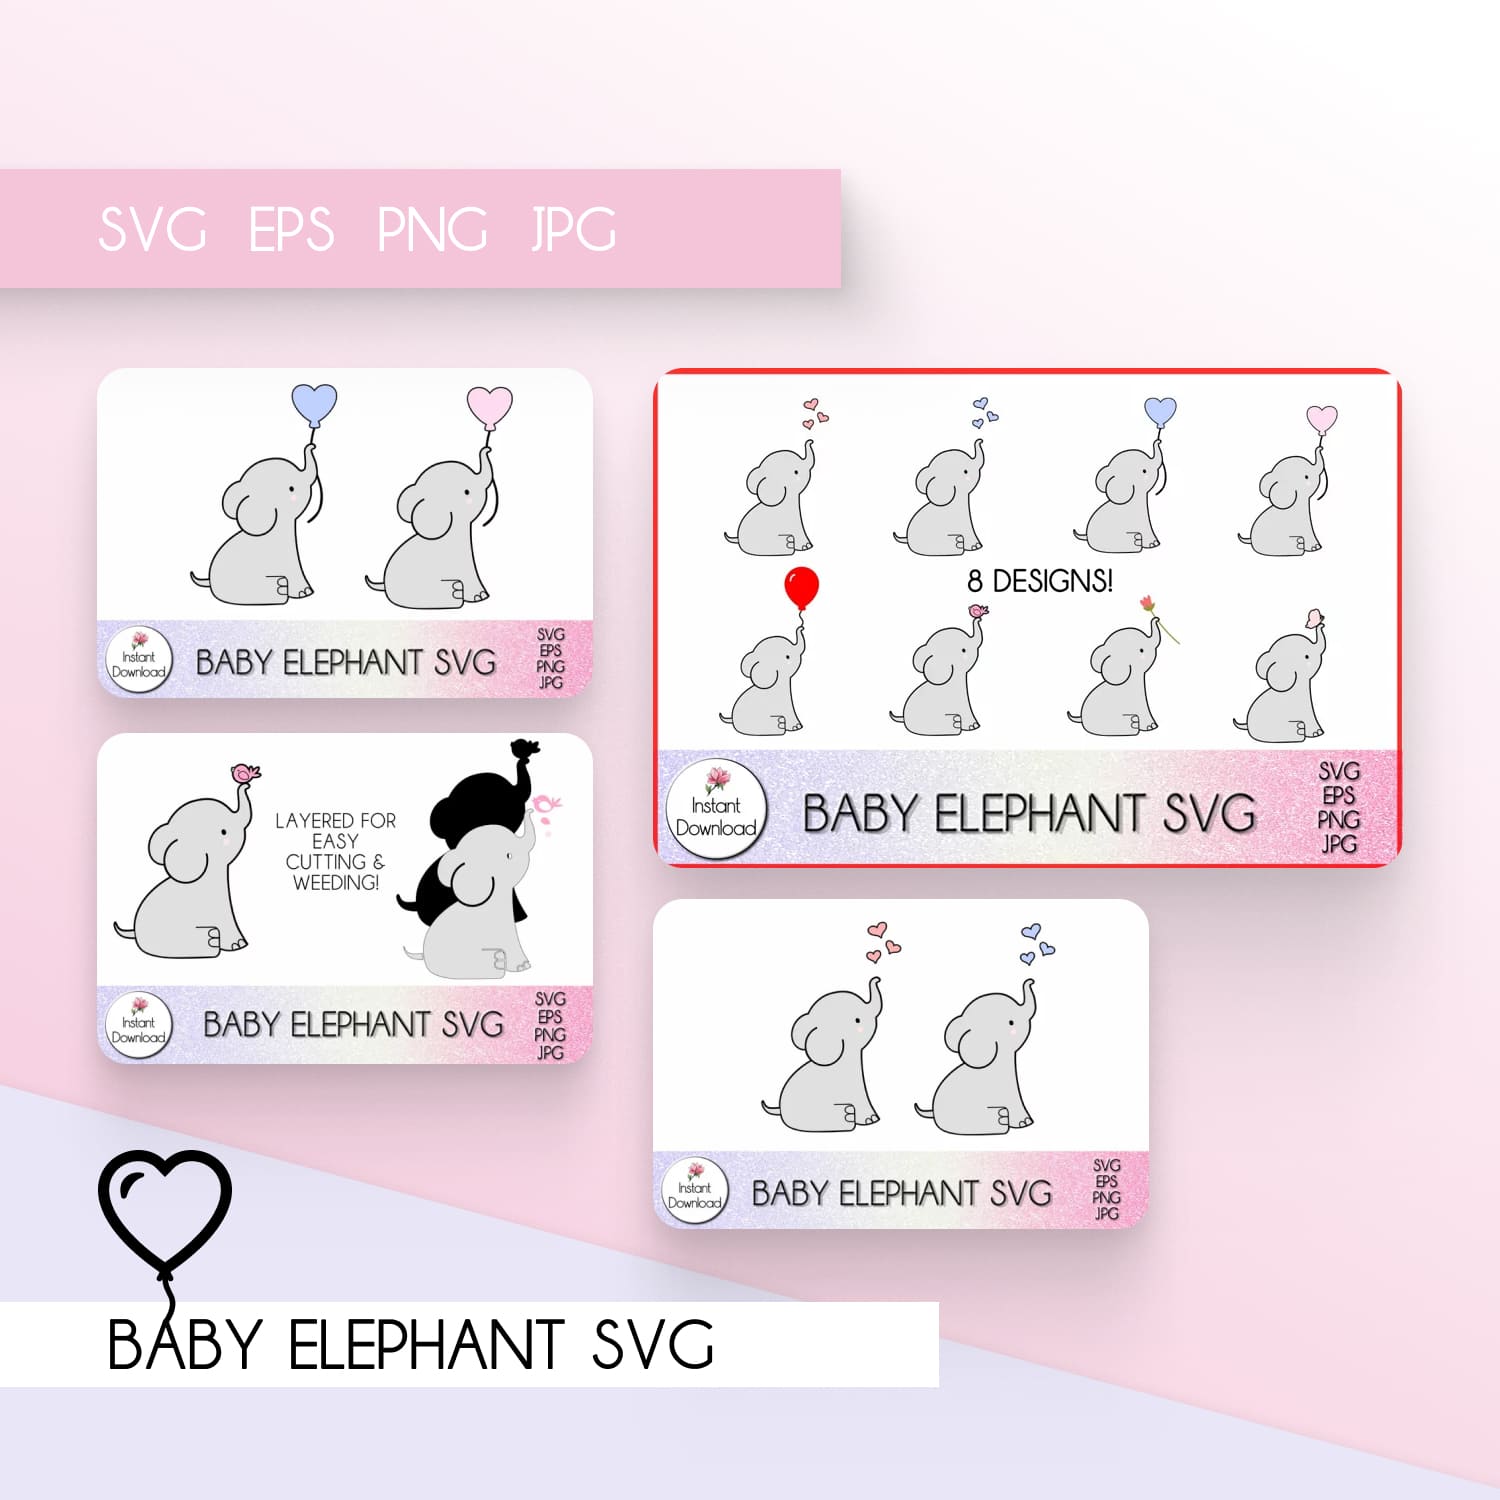 Kawaii Baby Elephant SVG main cover.